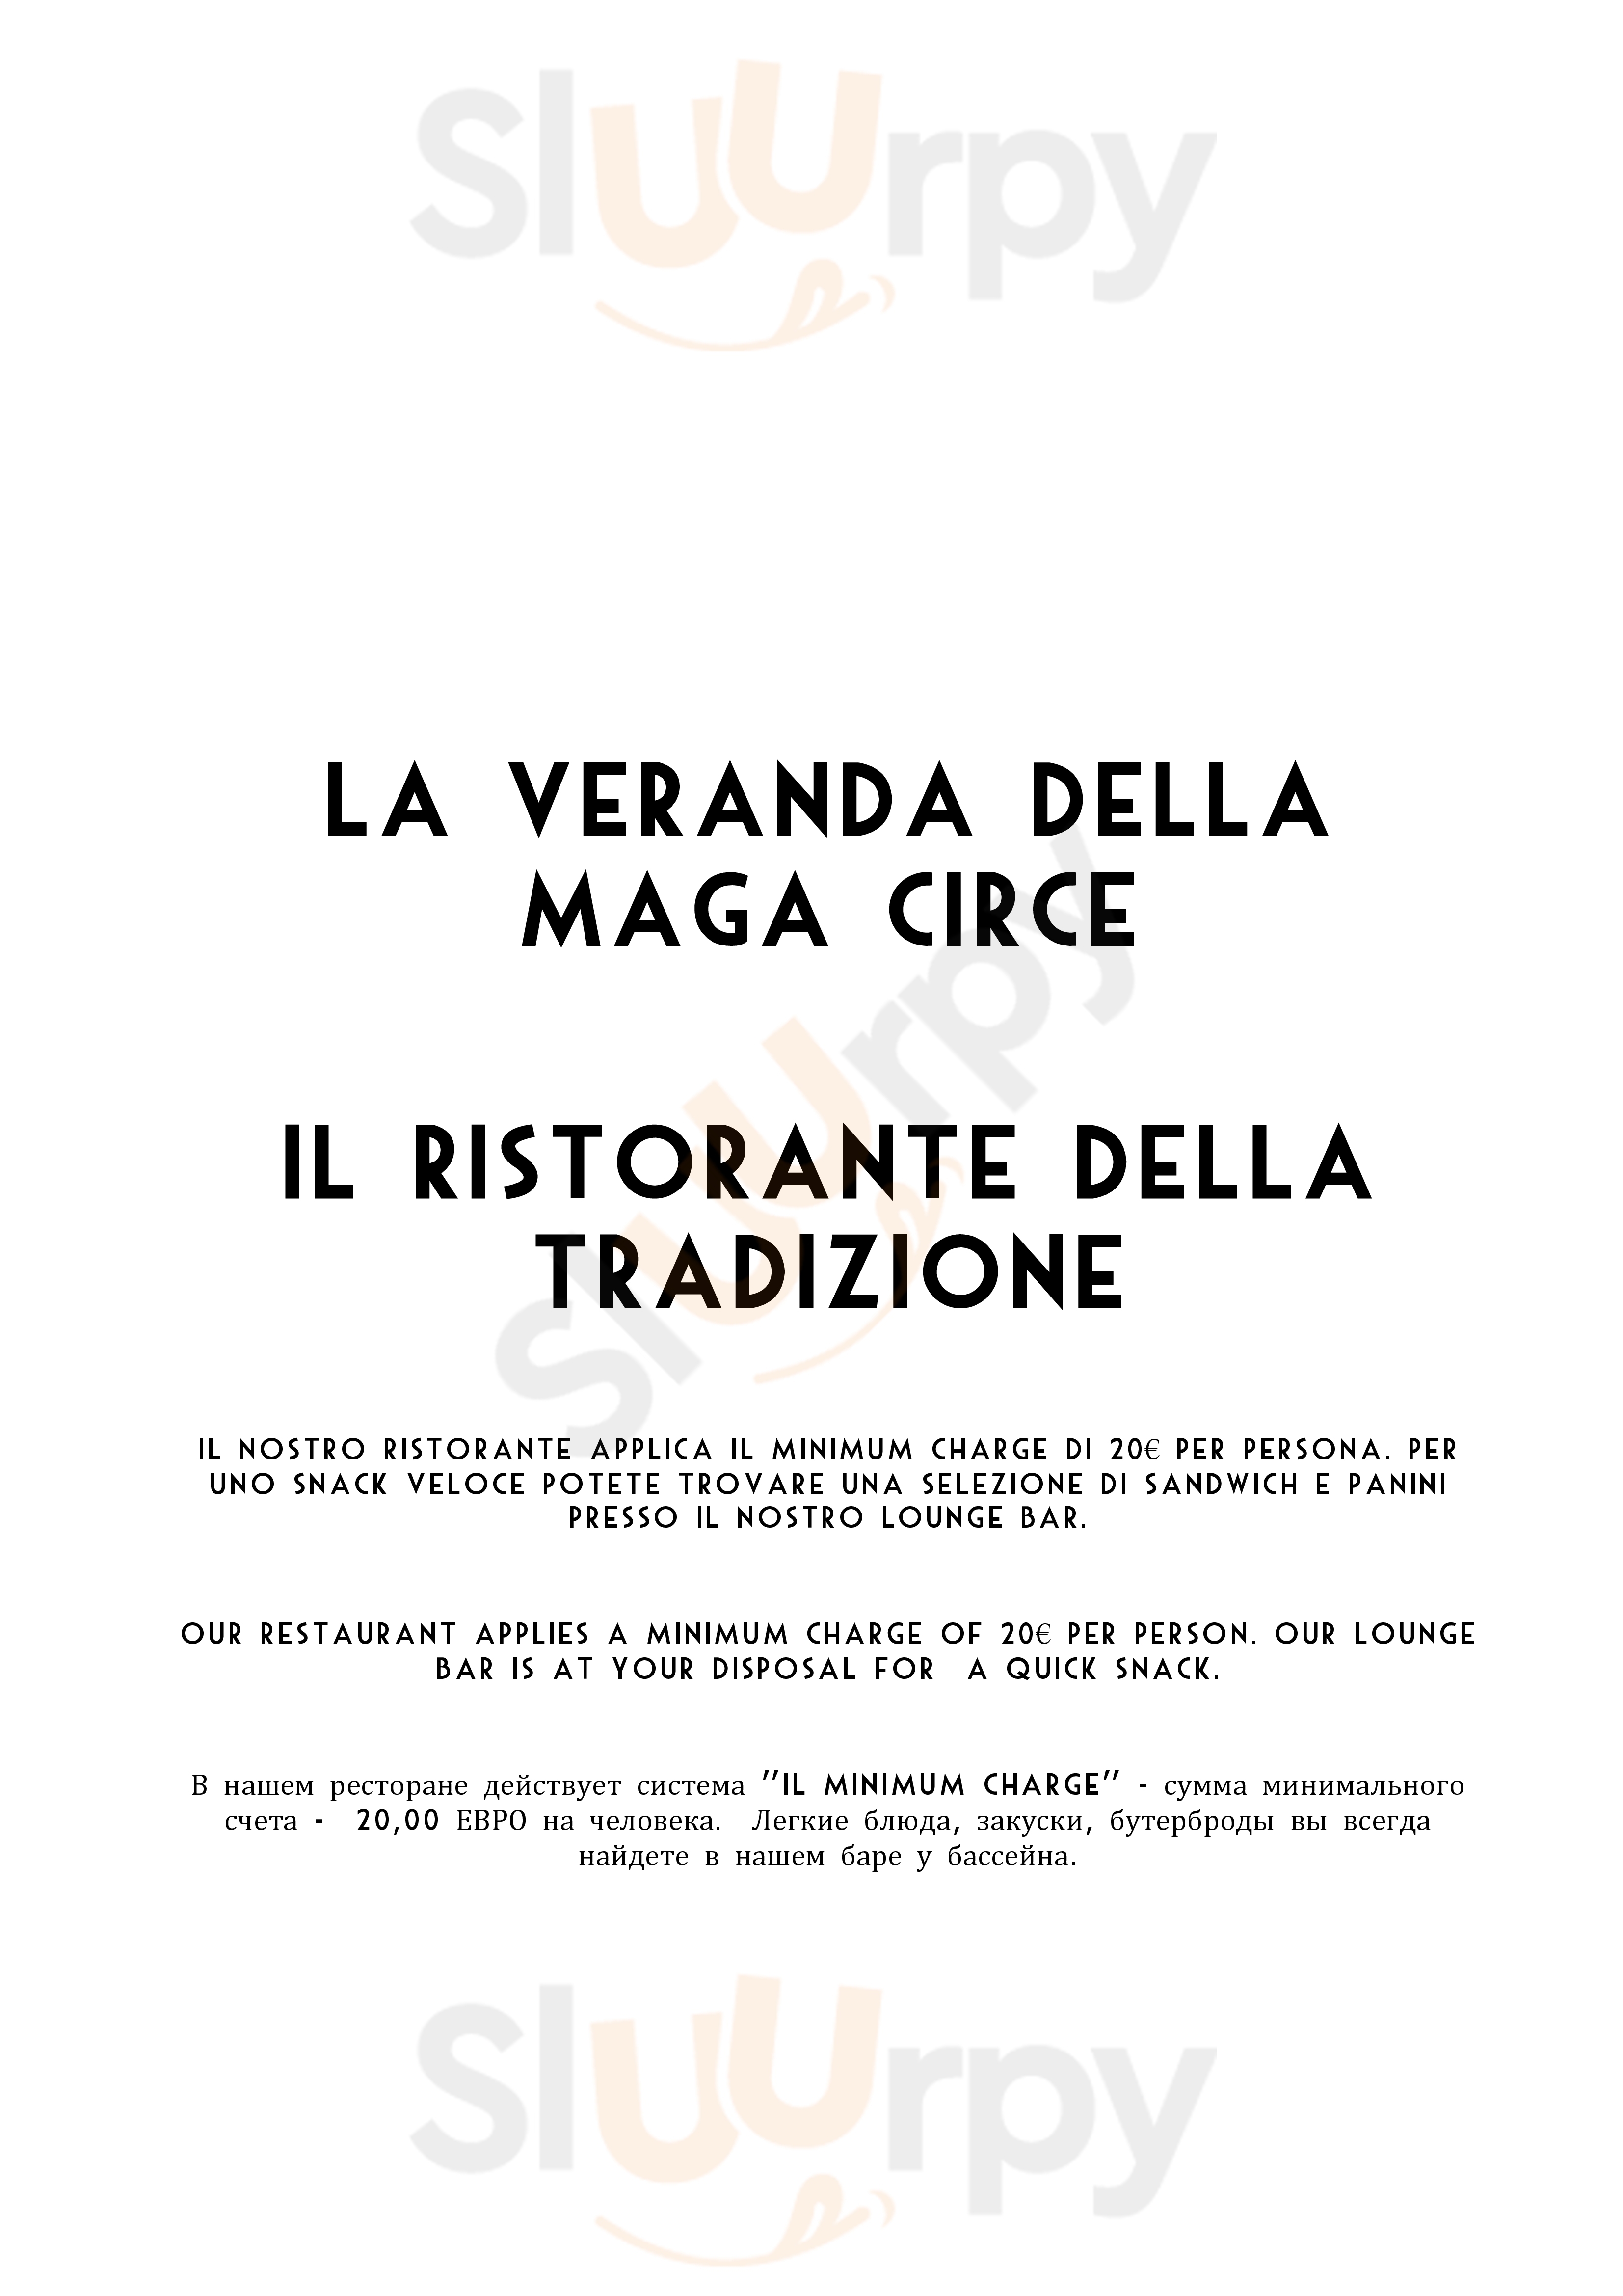 Maga Circe Ristorante Hotel San Felice Circeo menù 1 pagina